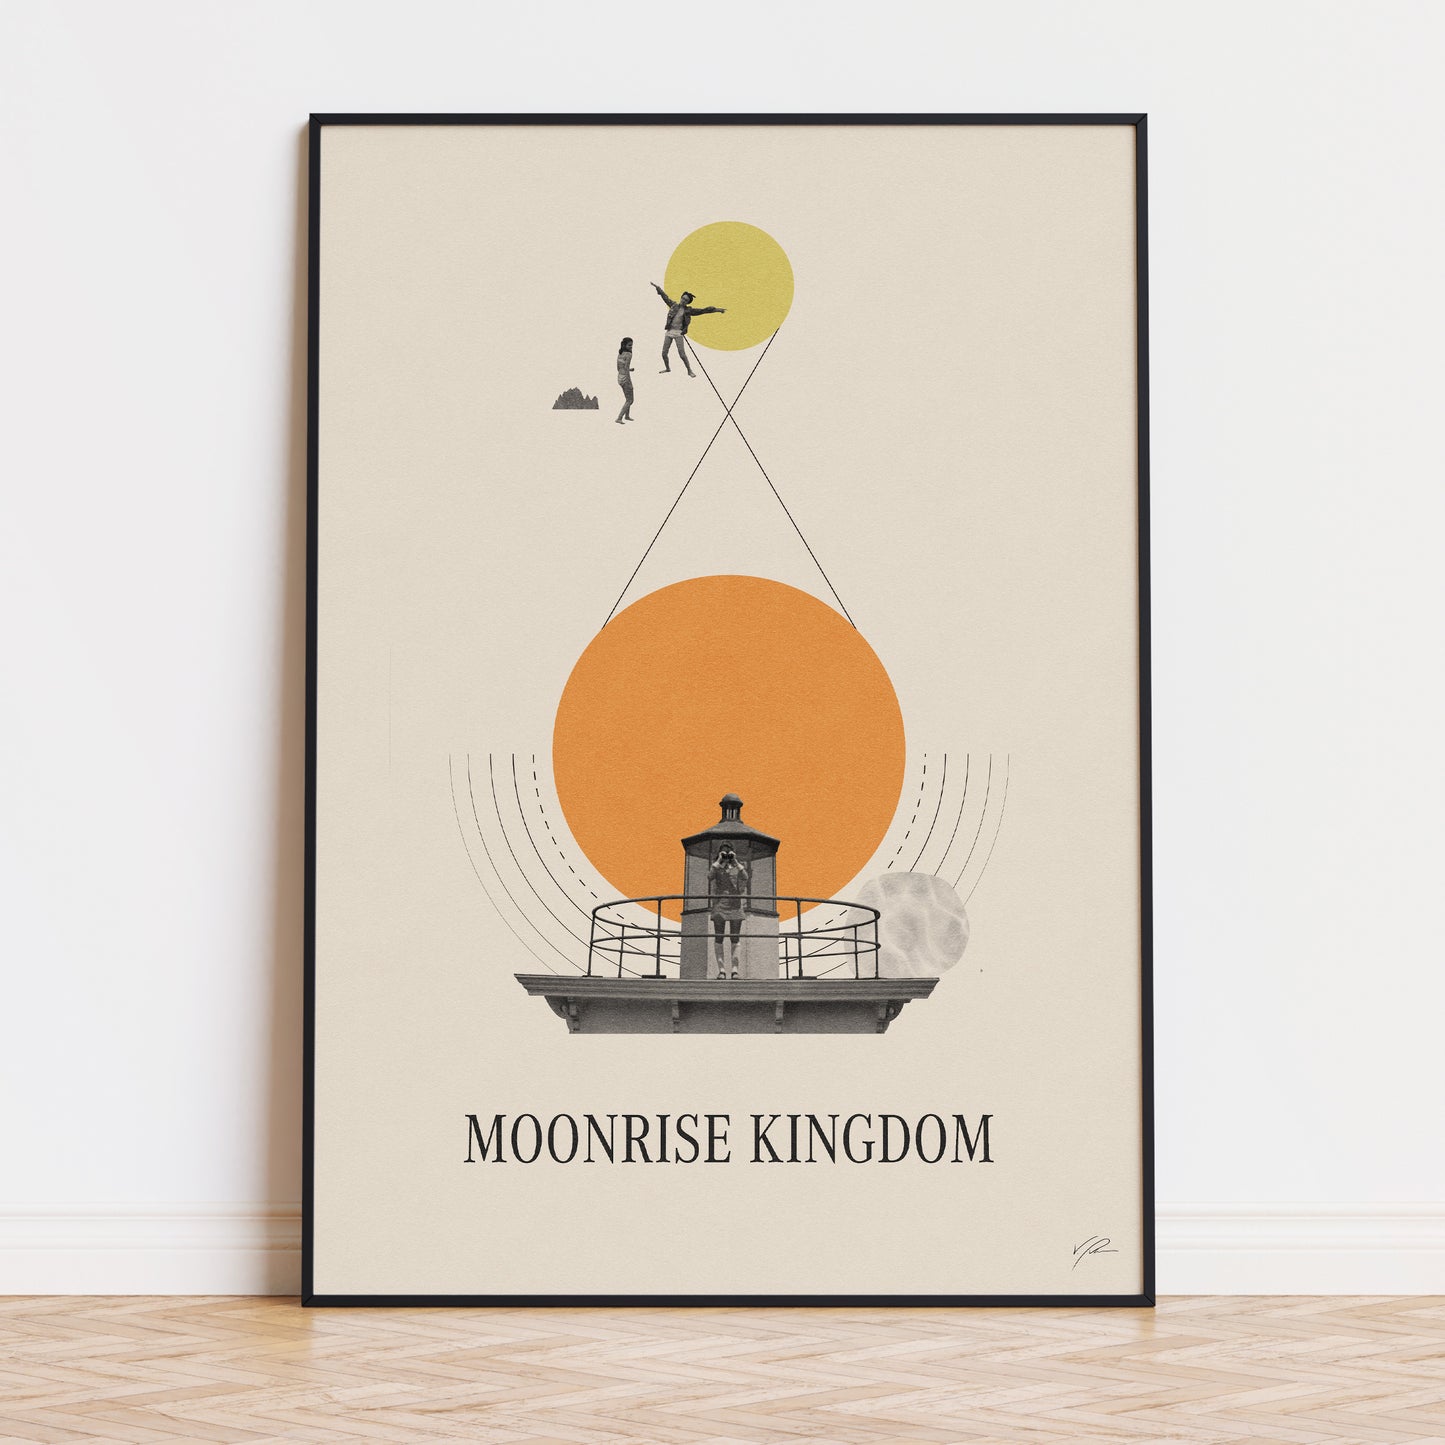 Moonrise Kingdom - Poster - alternative movie poster, film poster, mid century movie, minimalist poster, Moonrise Kingdom, movie artwork, movie poster, redesigned movie poster, wes anderson